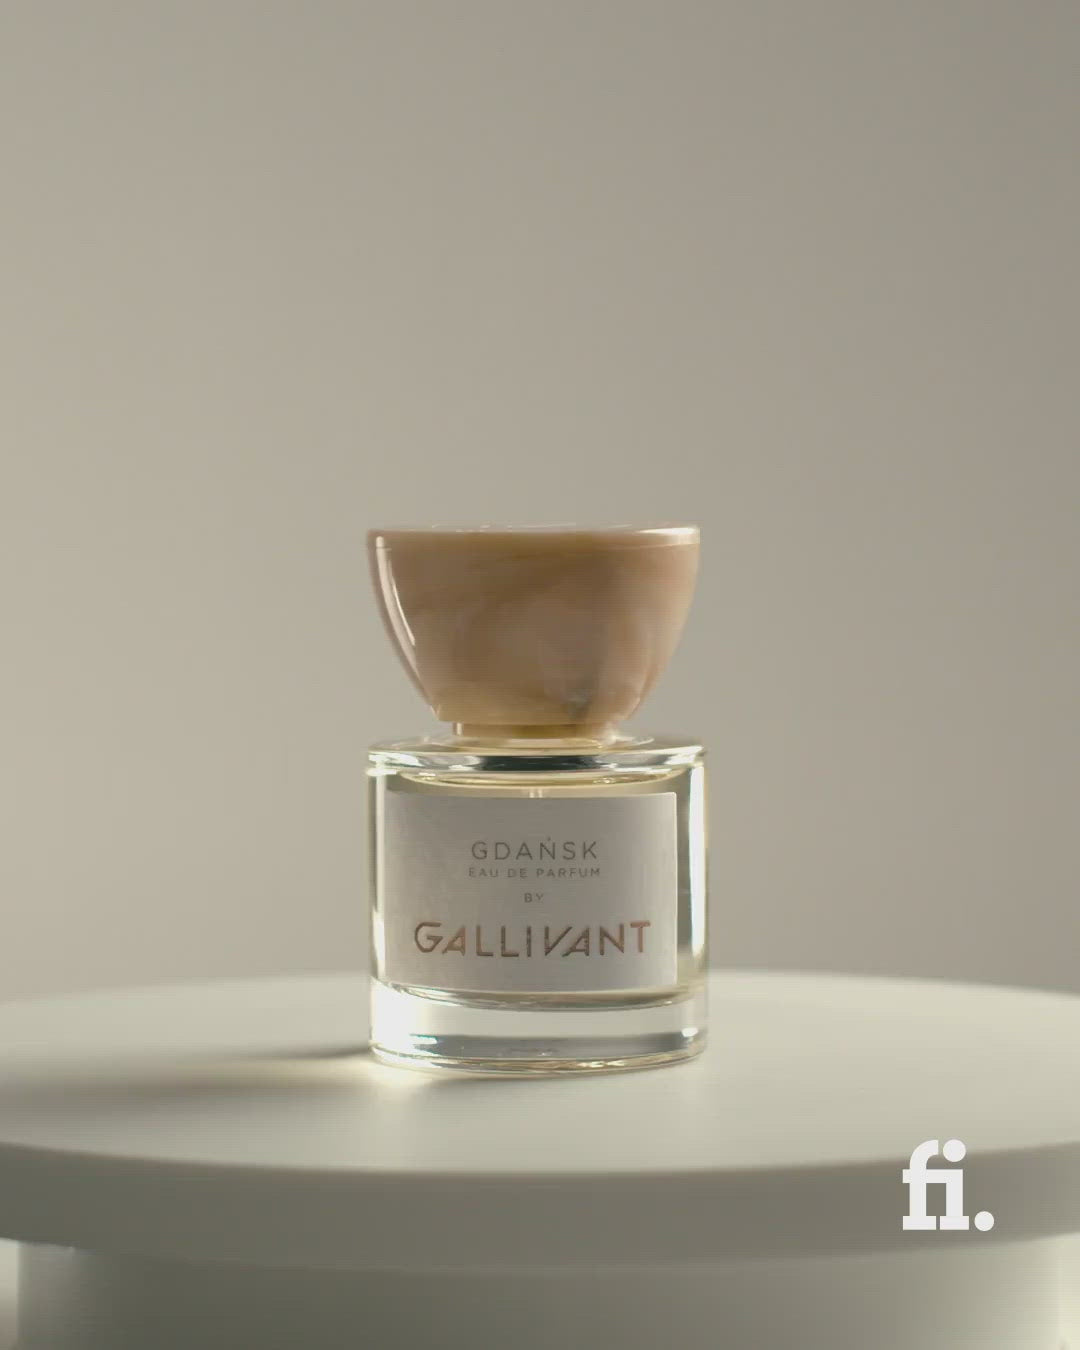 Video of Gdansk Eau de Parfum 30ml Bottle by Gallivant